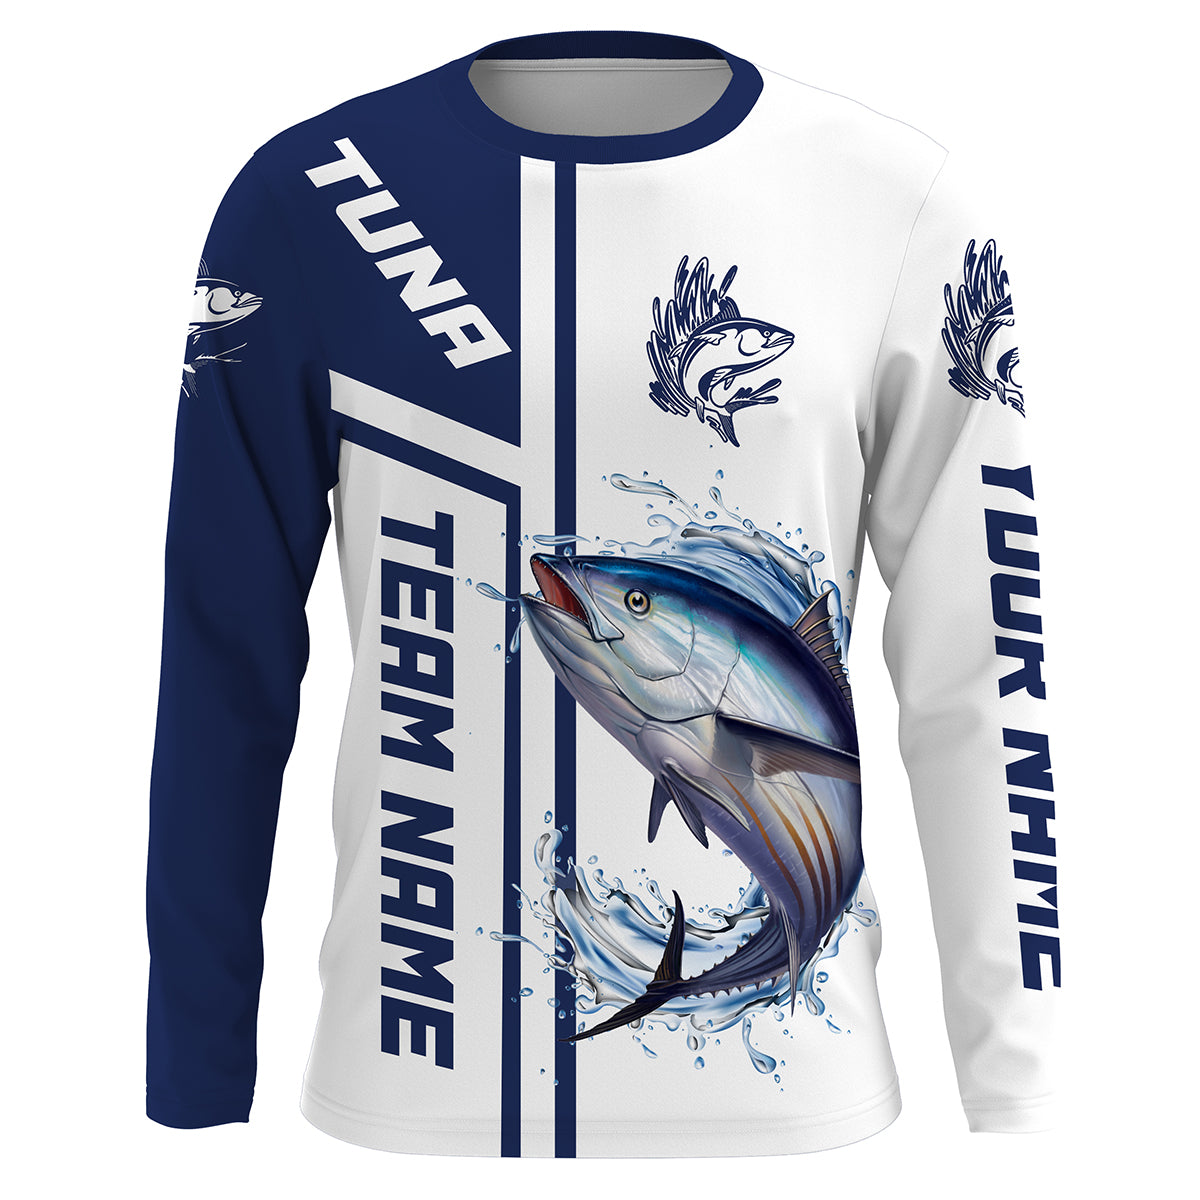 KBF Sublimated Jersey - front  Fishing shirts, Fishing outfits, Long  sleeve shirts